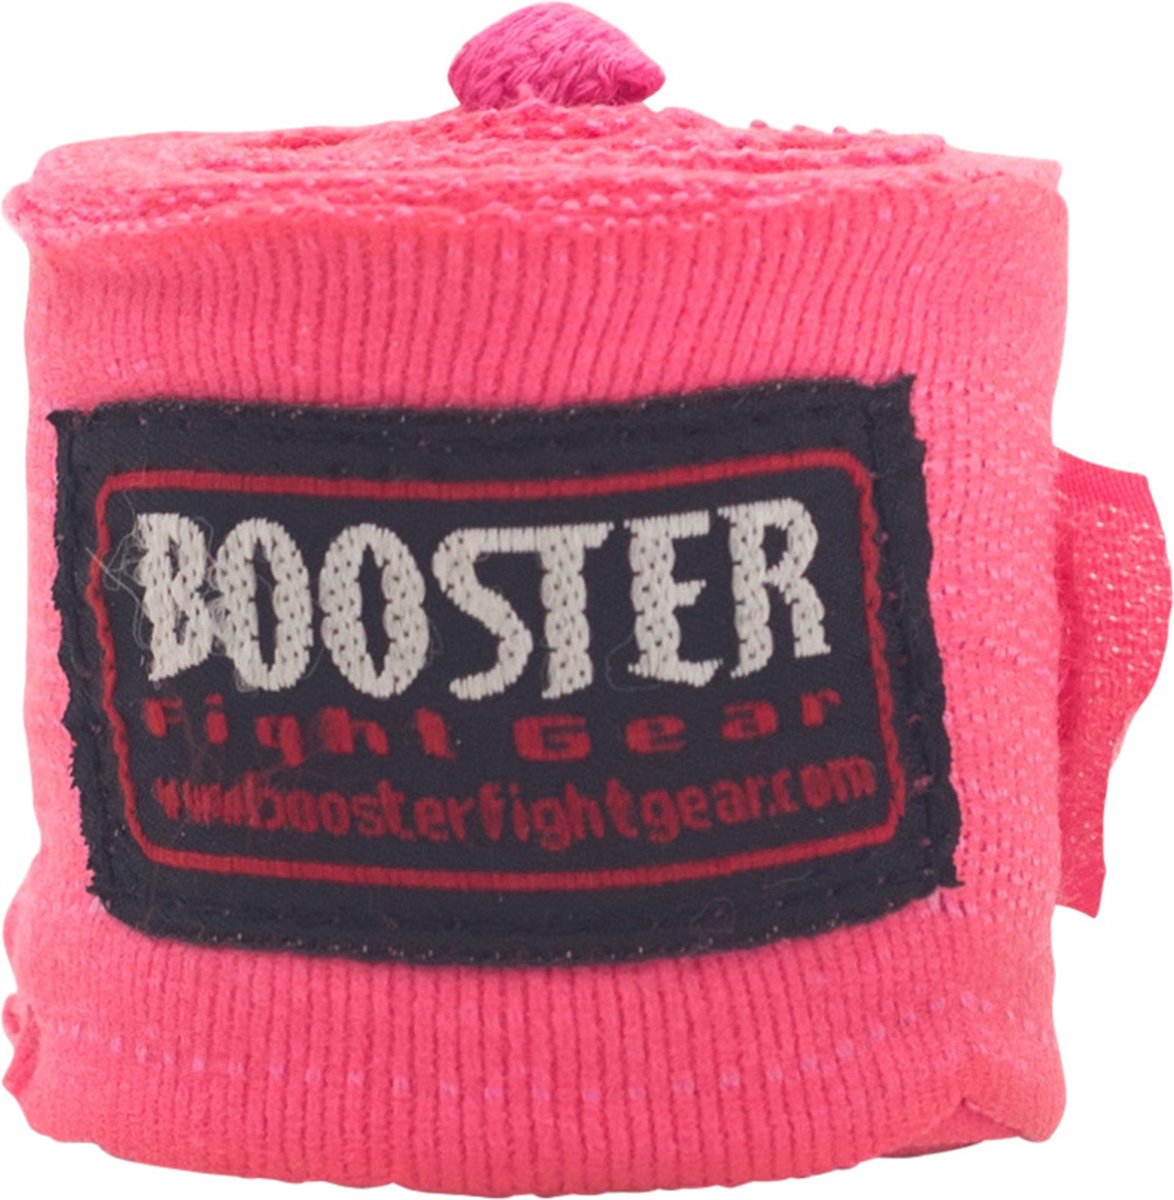 Booster Fightgear - BPC Pink 460cm - Standaard